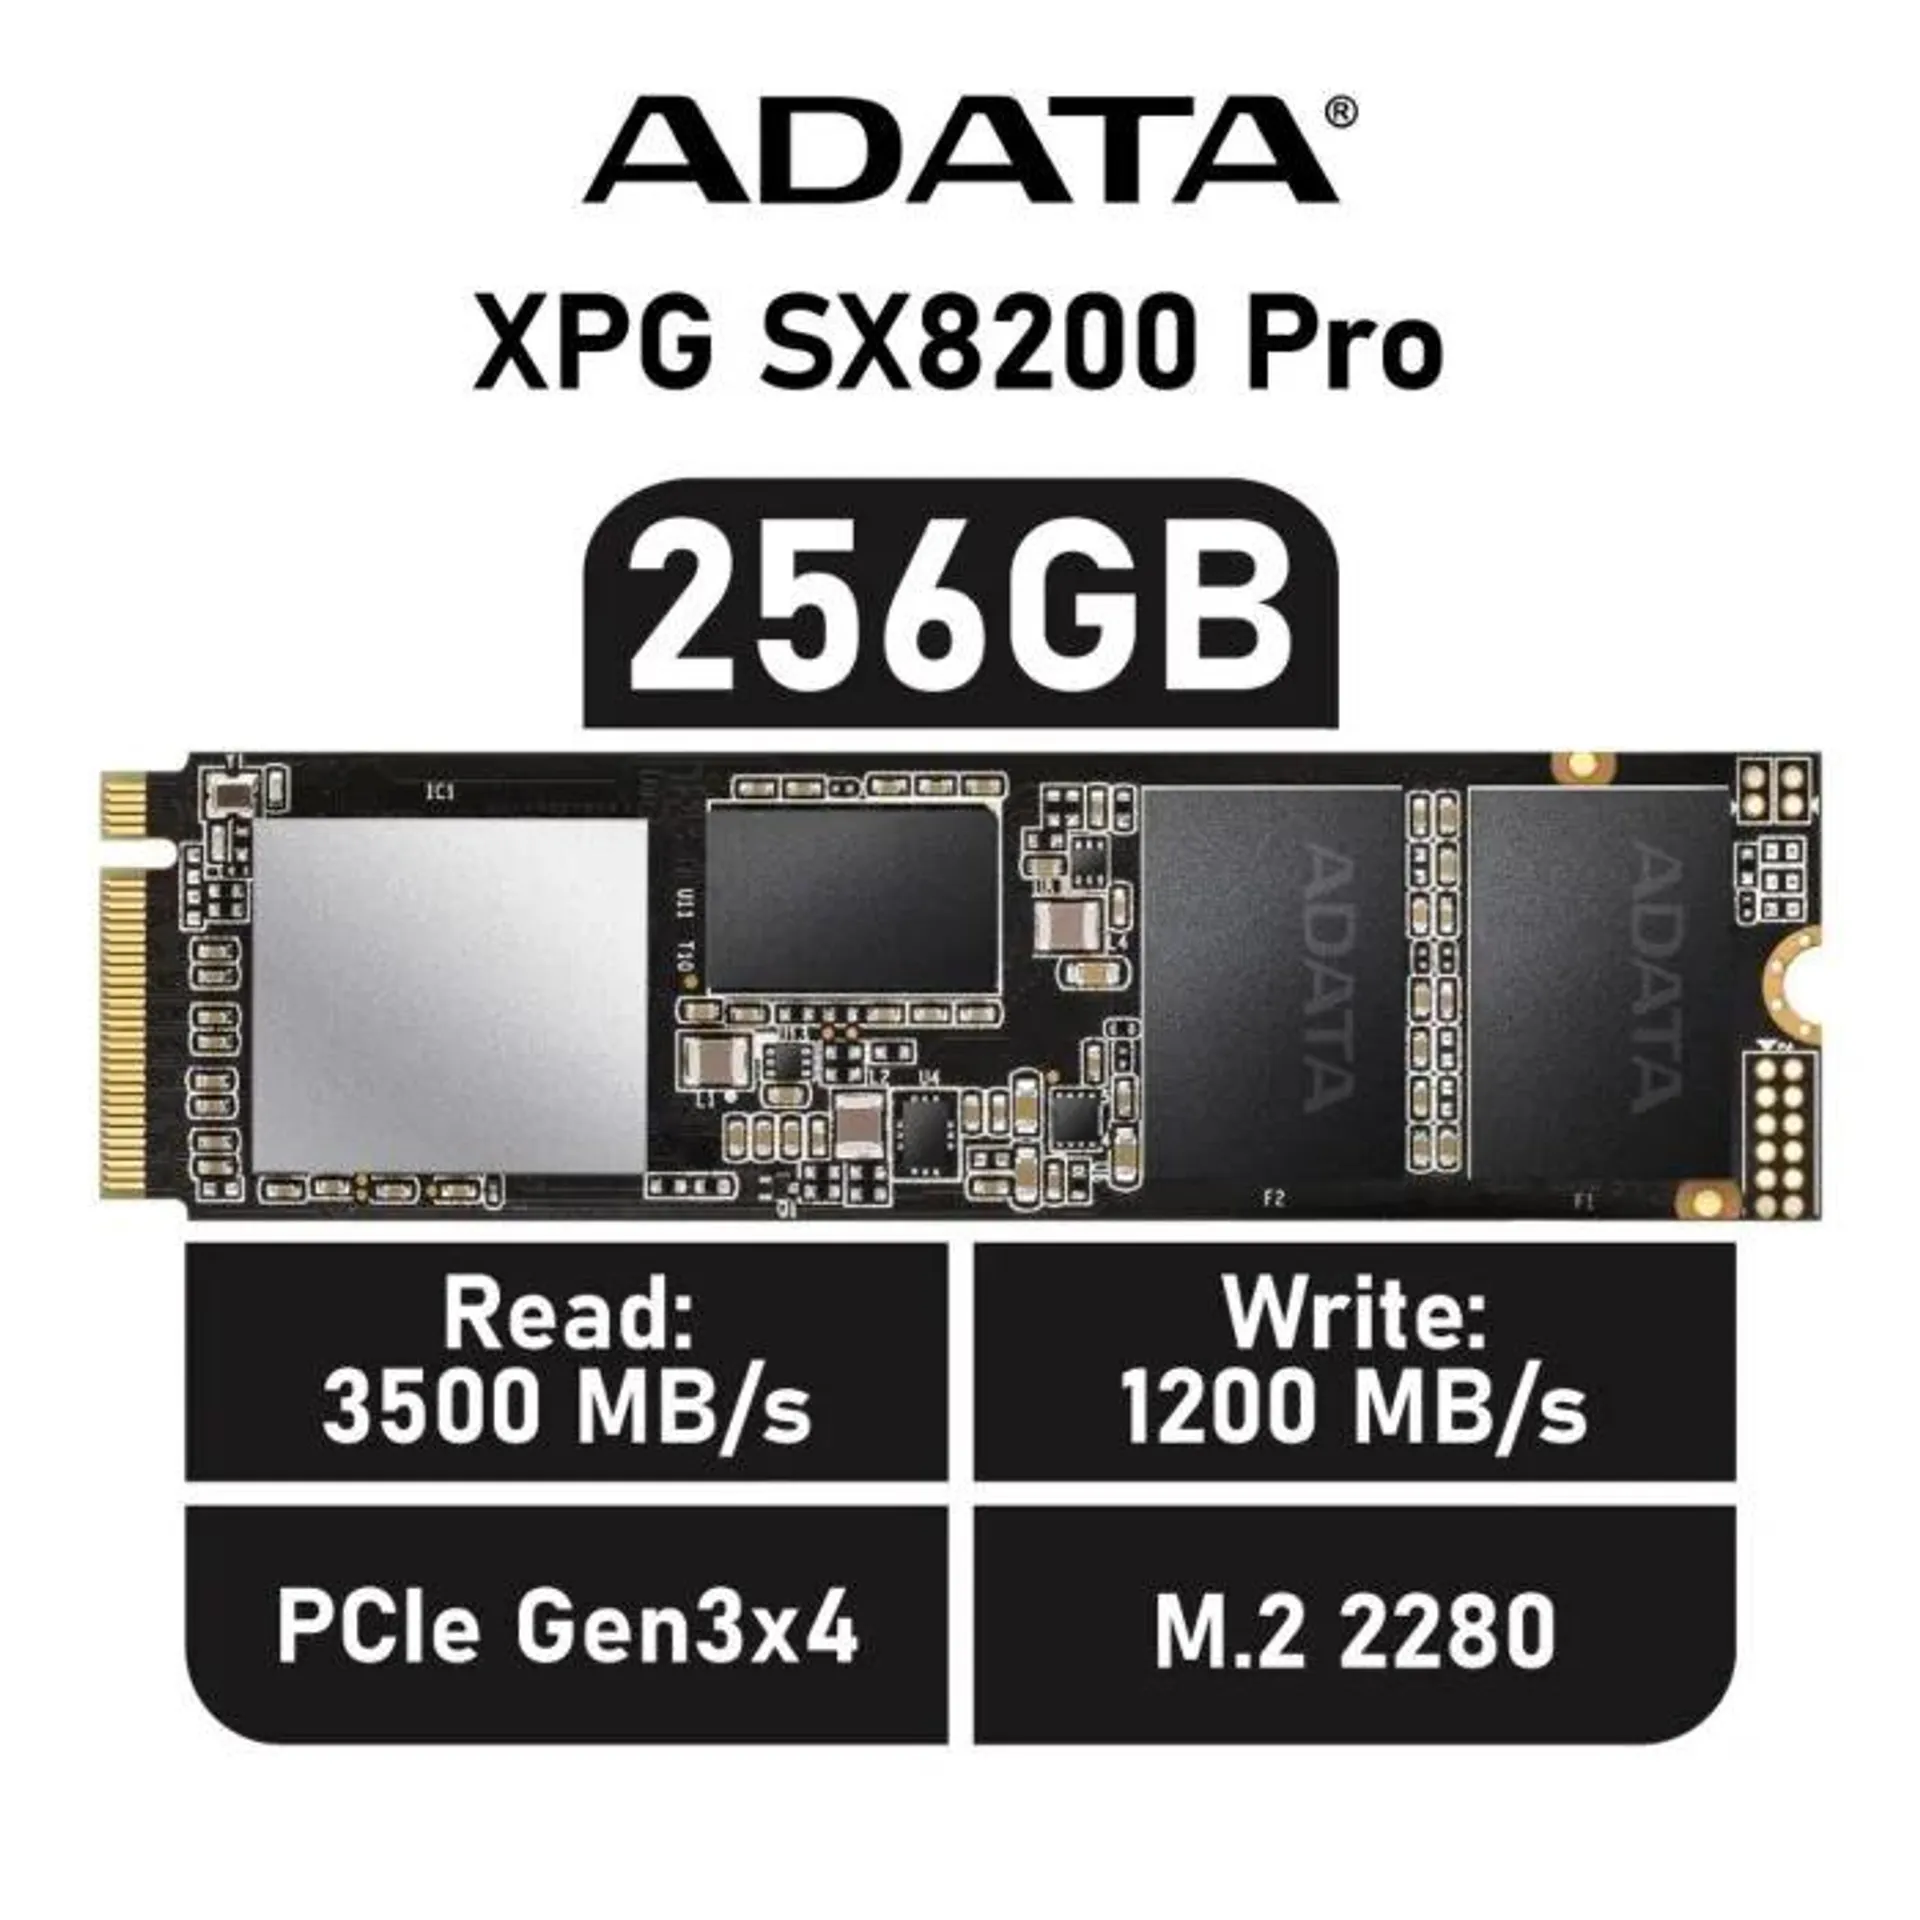 ADATA XPG SX8200 Pro 256GB PCIe Gen3x4 ASX8200PNP-256GT-C M.2 2280 Solid State Drive